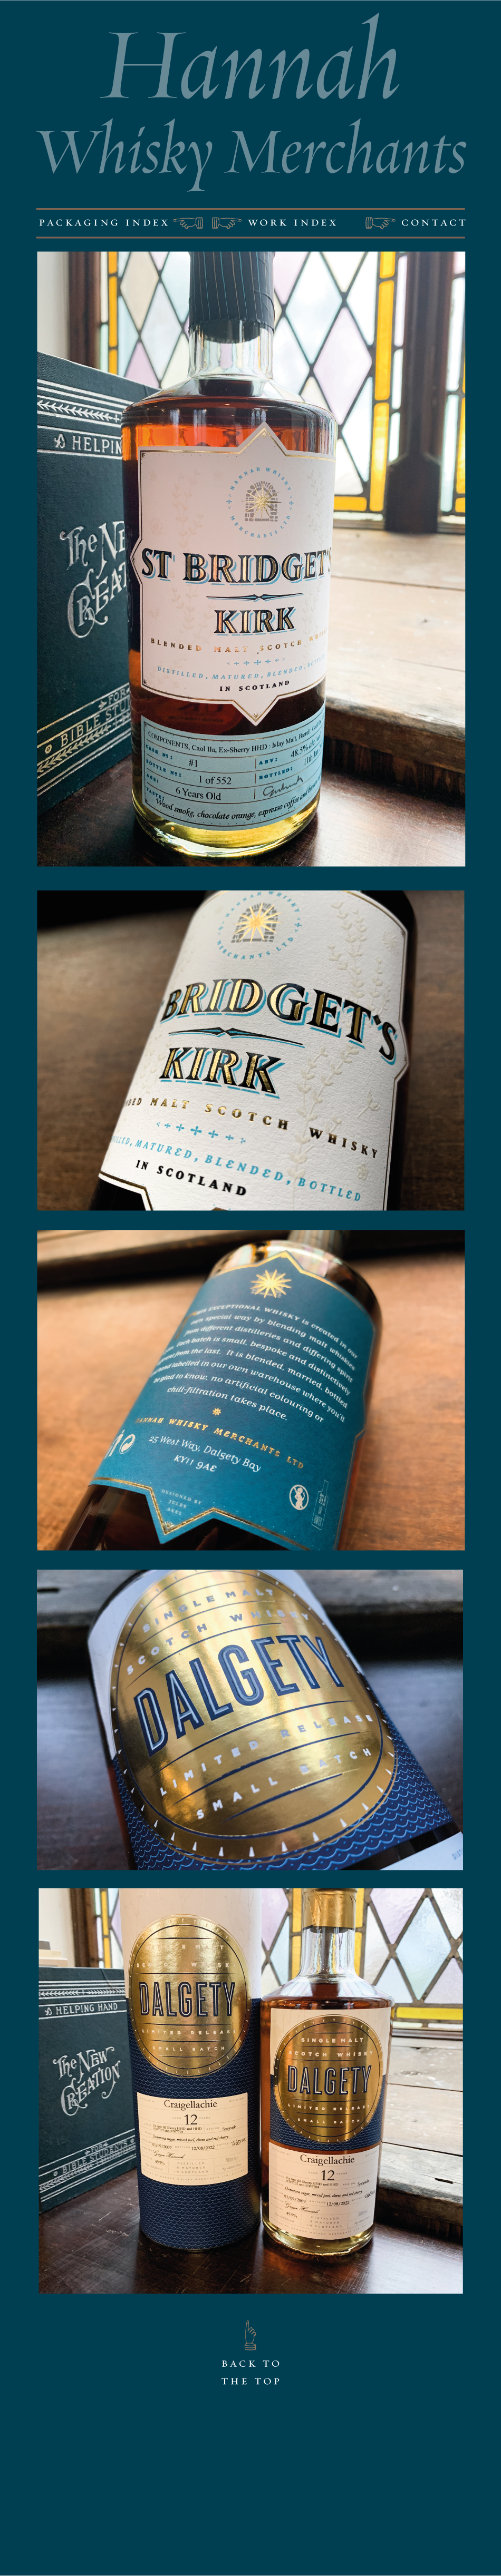 St Bridget's Kirk Whisky packaging designer, Scottish packaging specialist